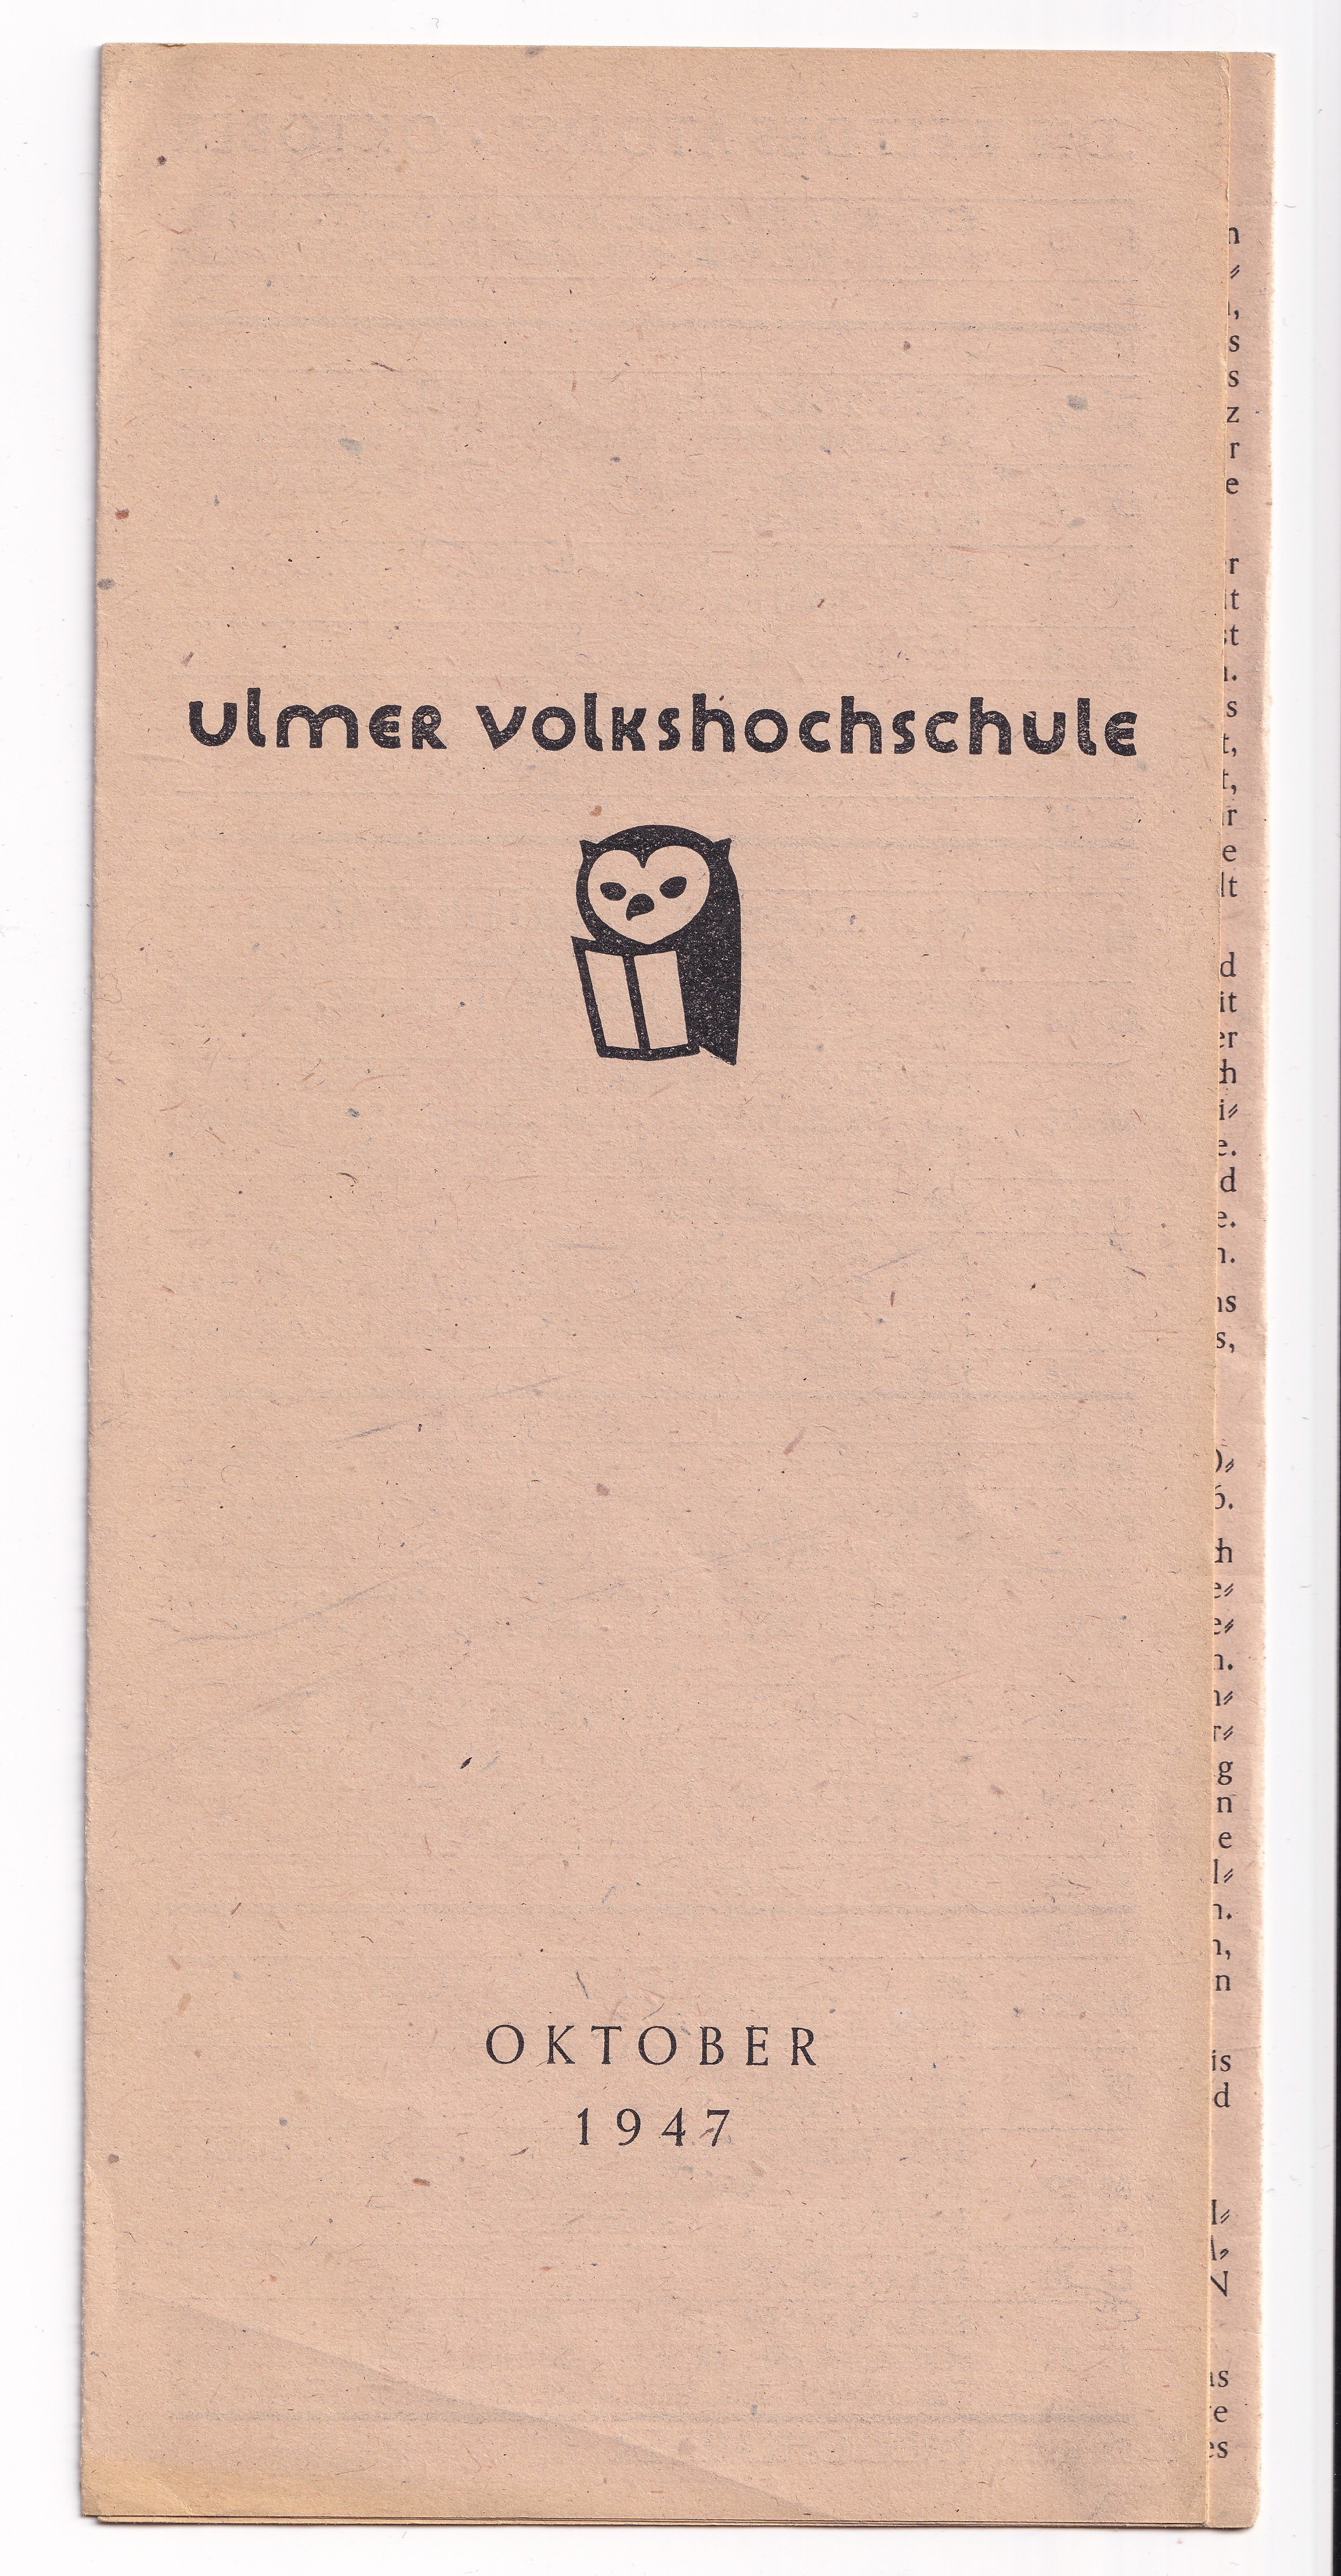 Ulmer Volkshochschule, Oktober 1947 (Museum Ulm/HfG-Archiv RR-P)